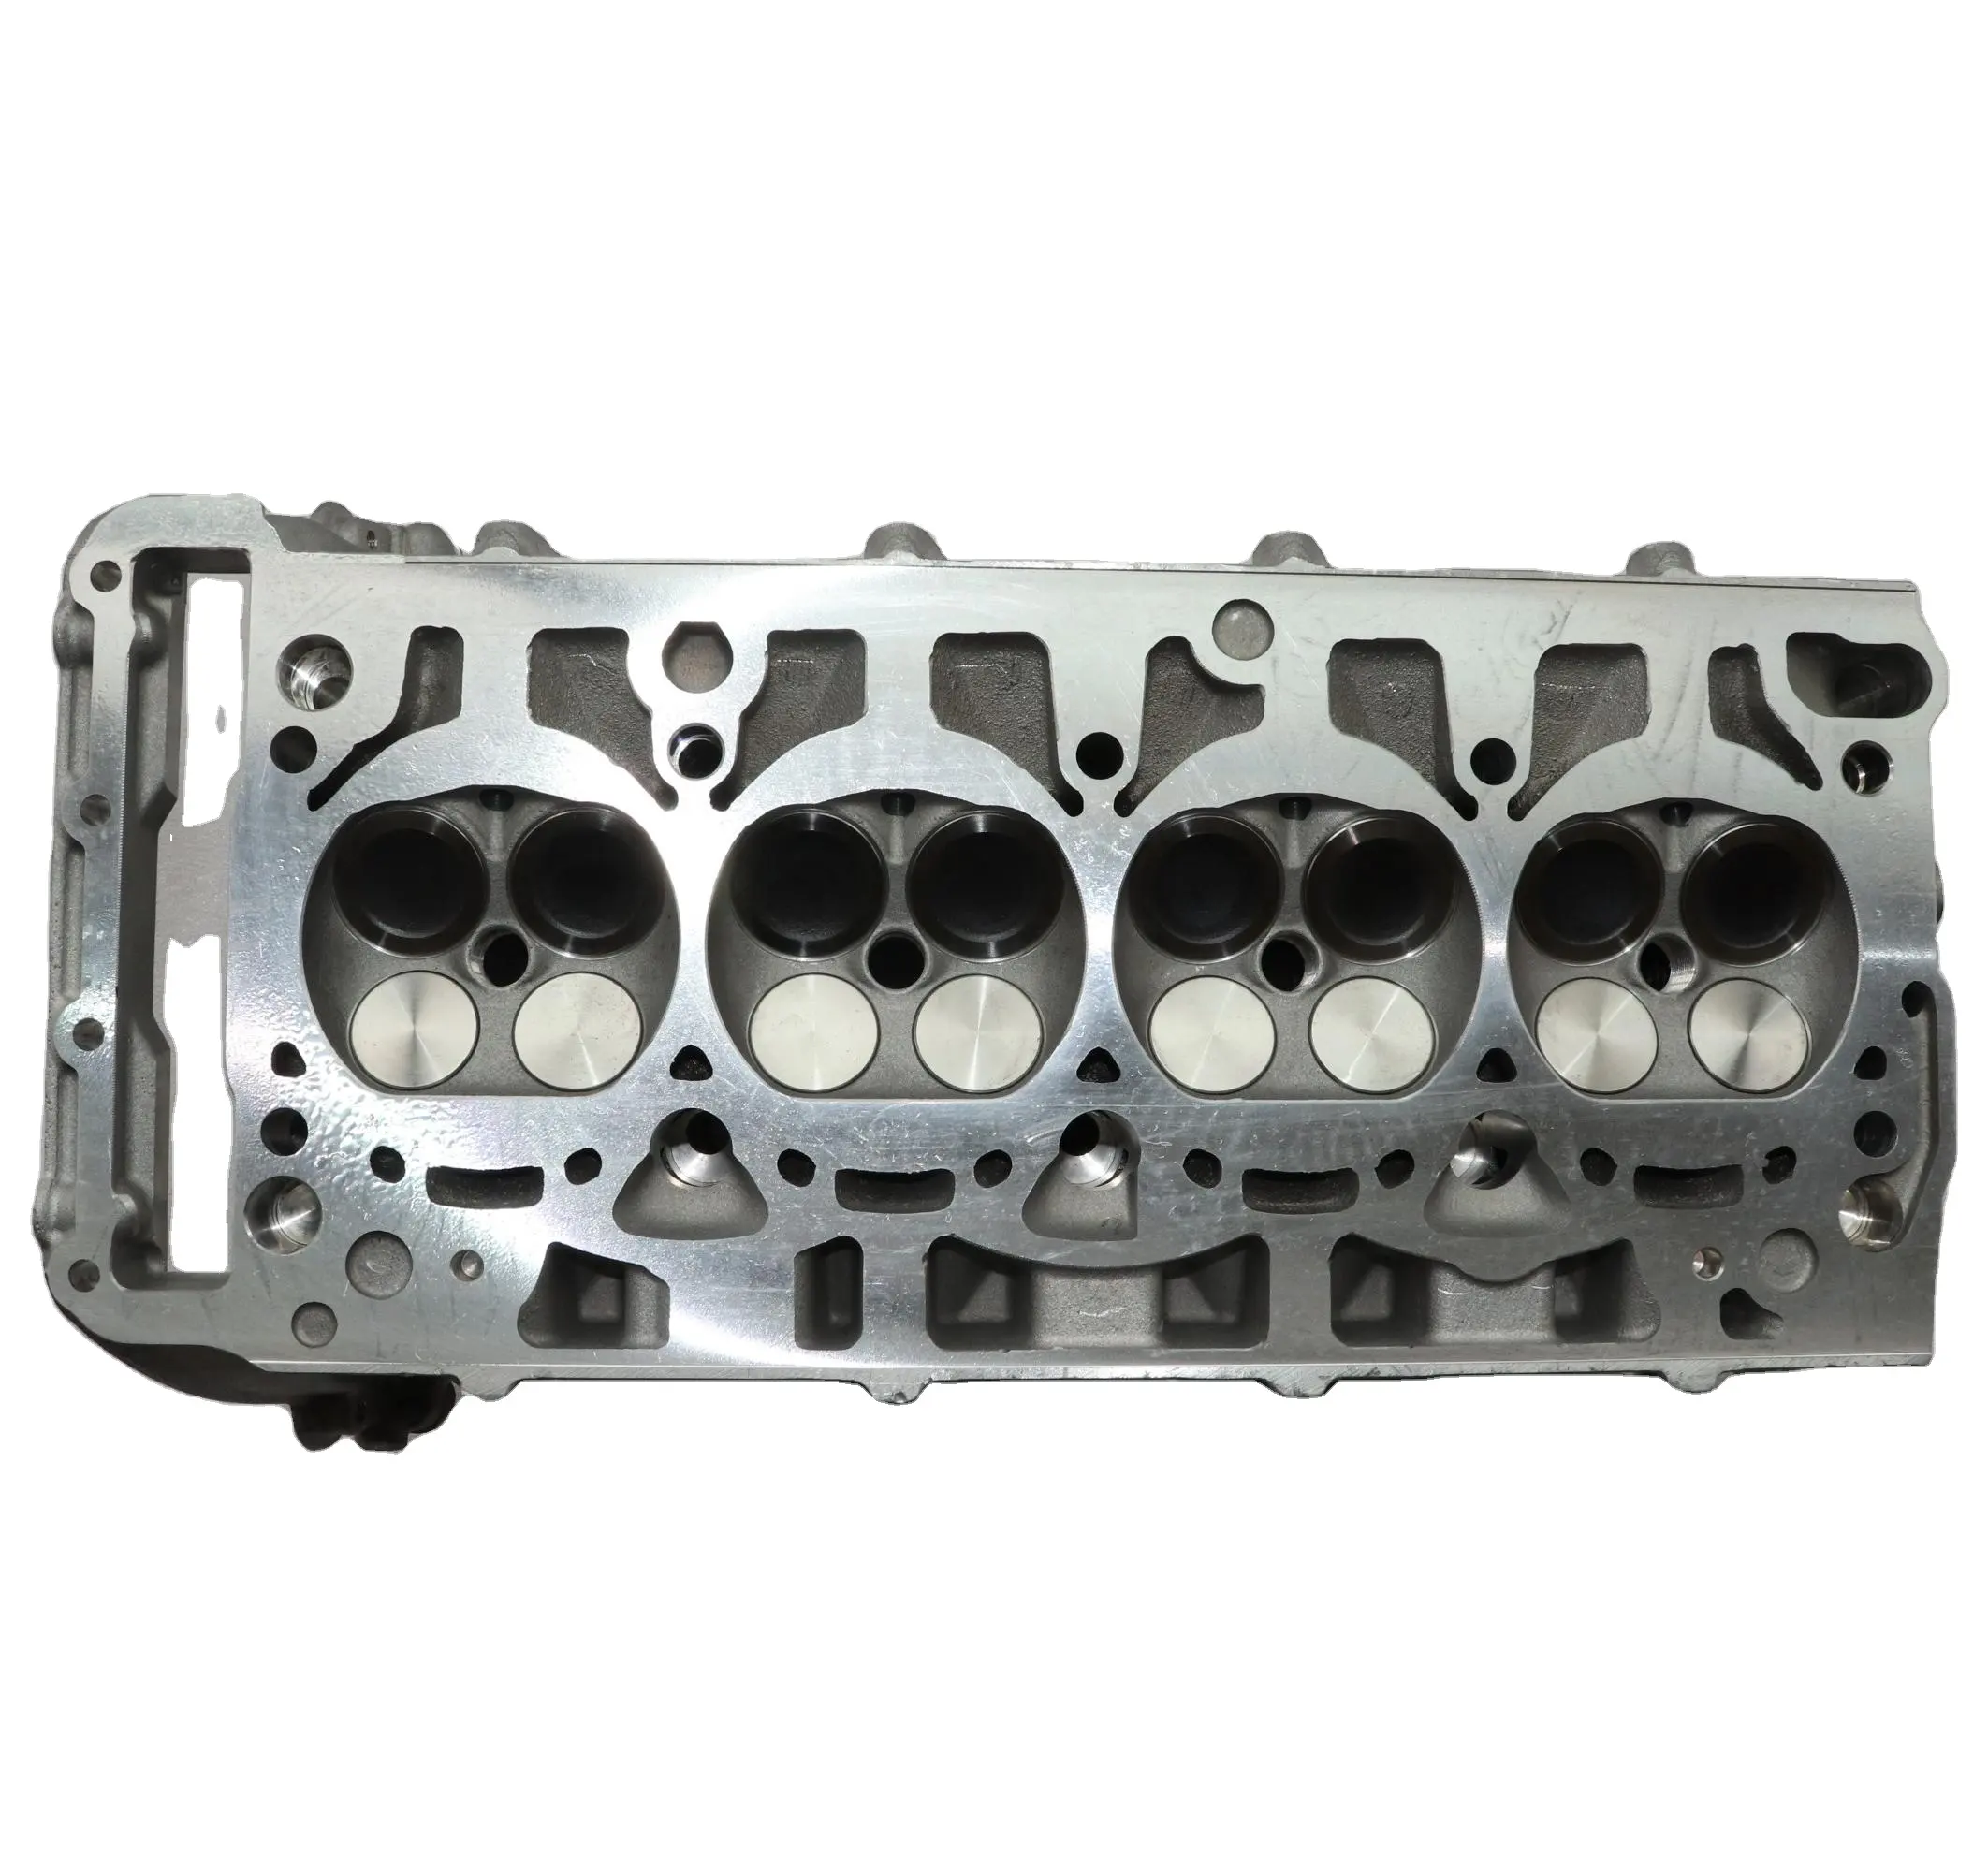 Kit de meia montagem de cabeça de cilindro de motor de alumínio Haishida para CW Golf Passat Q5 EA888 1.8T 2.0T CEA CGM